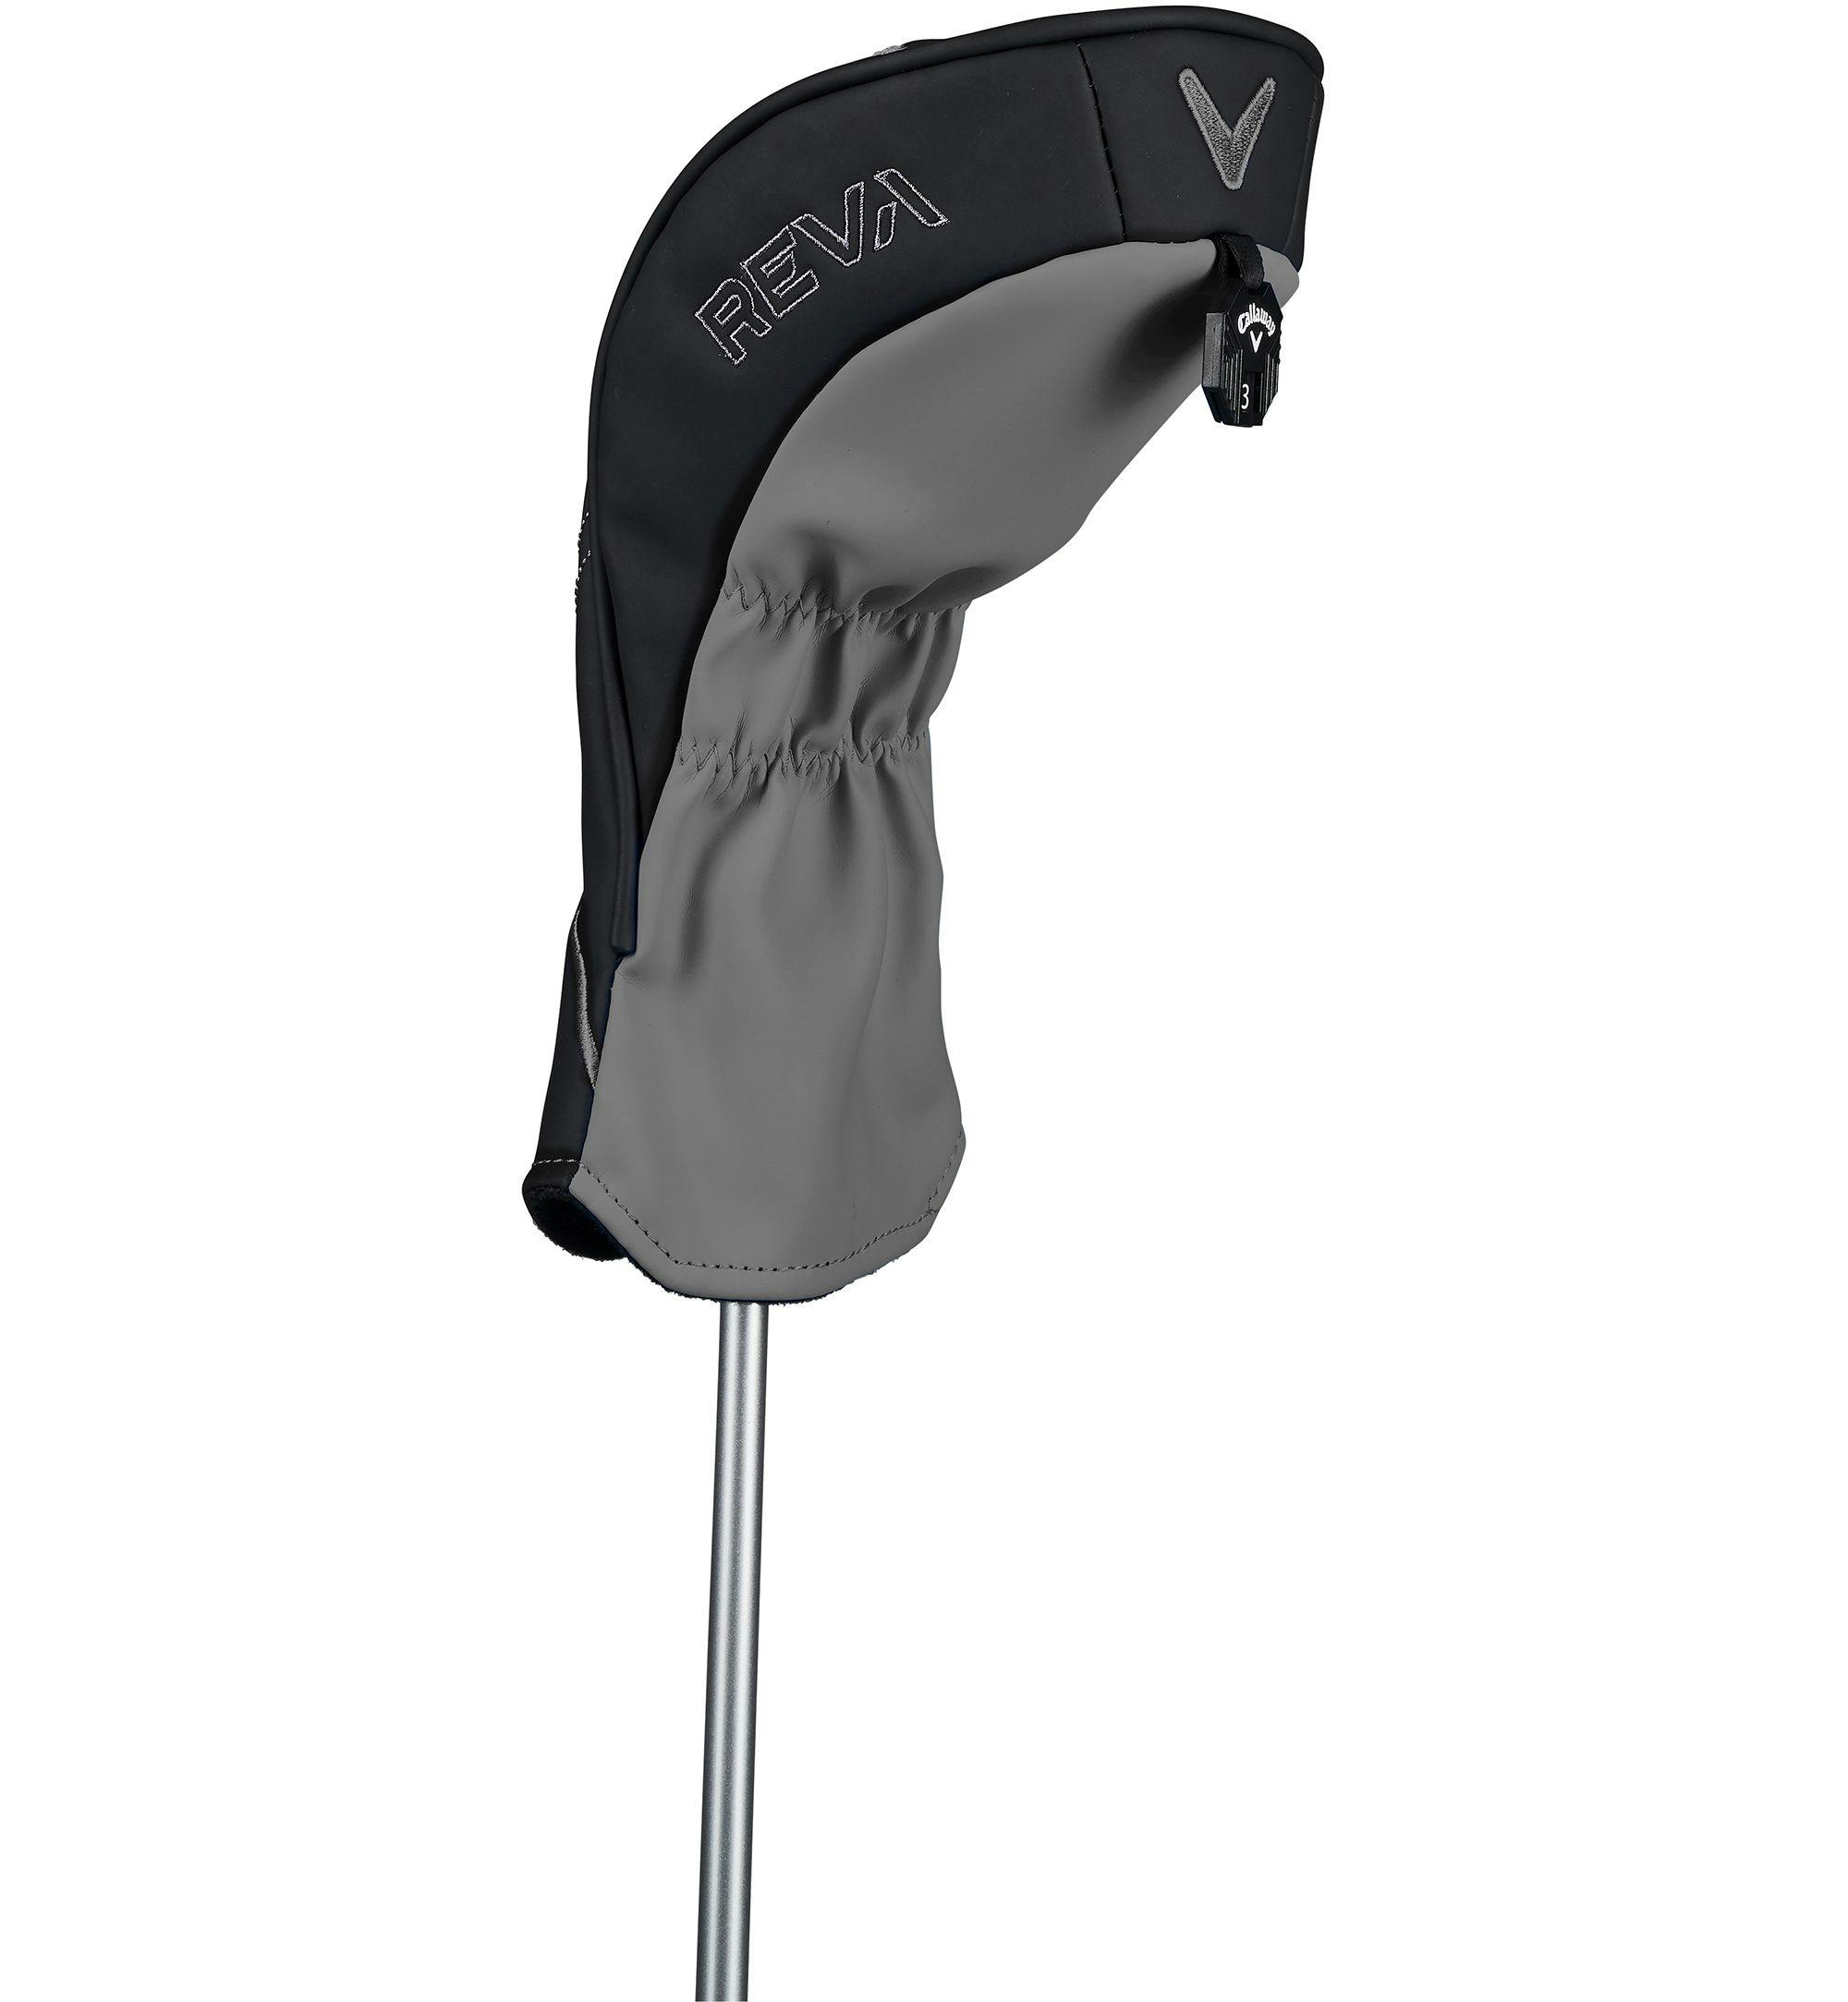 Callaway REVA 11-Piece Complete Golf Set · Right handed · Graphite · Ladies · Regular · Black